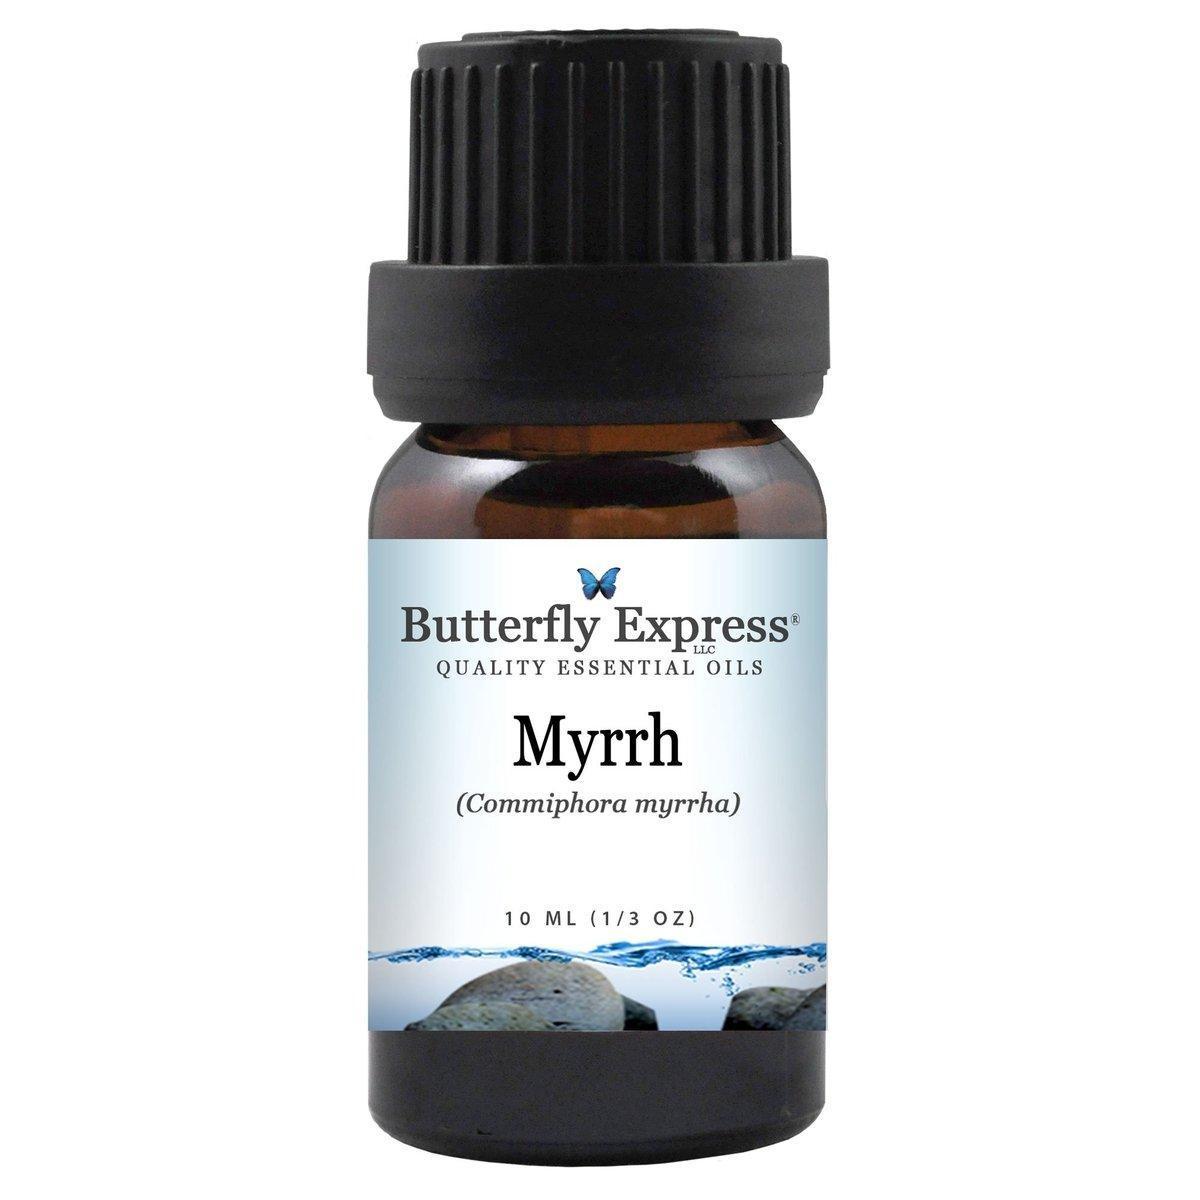 Myrrh essential oils